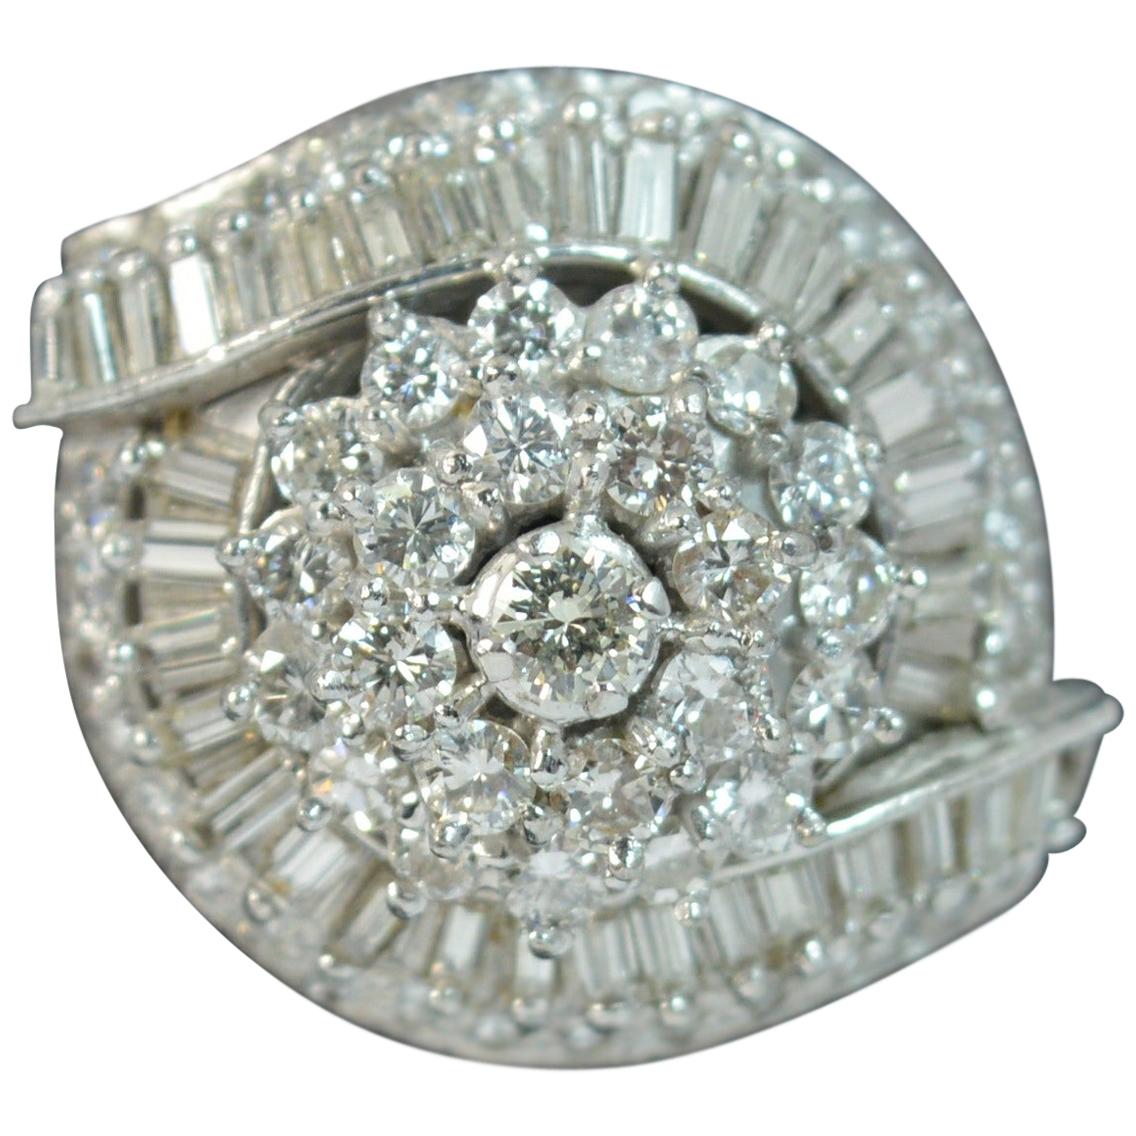 Huge 3.25 Carat Diamond and Platinum Custer Cocktail Ring